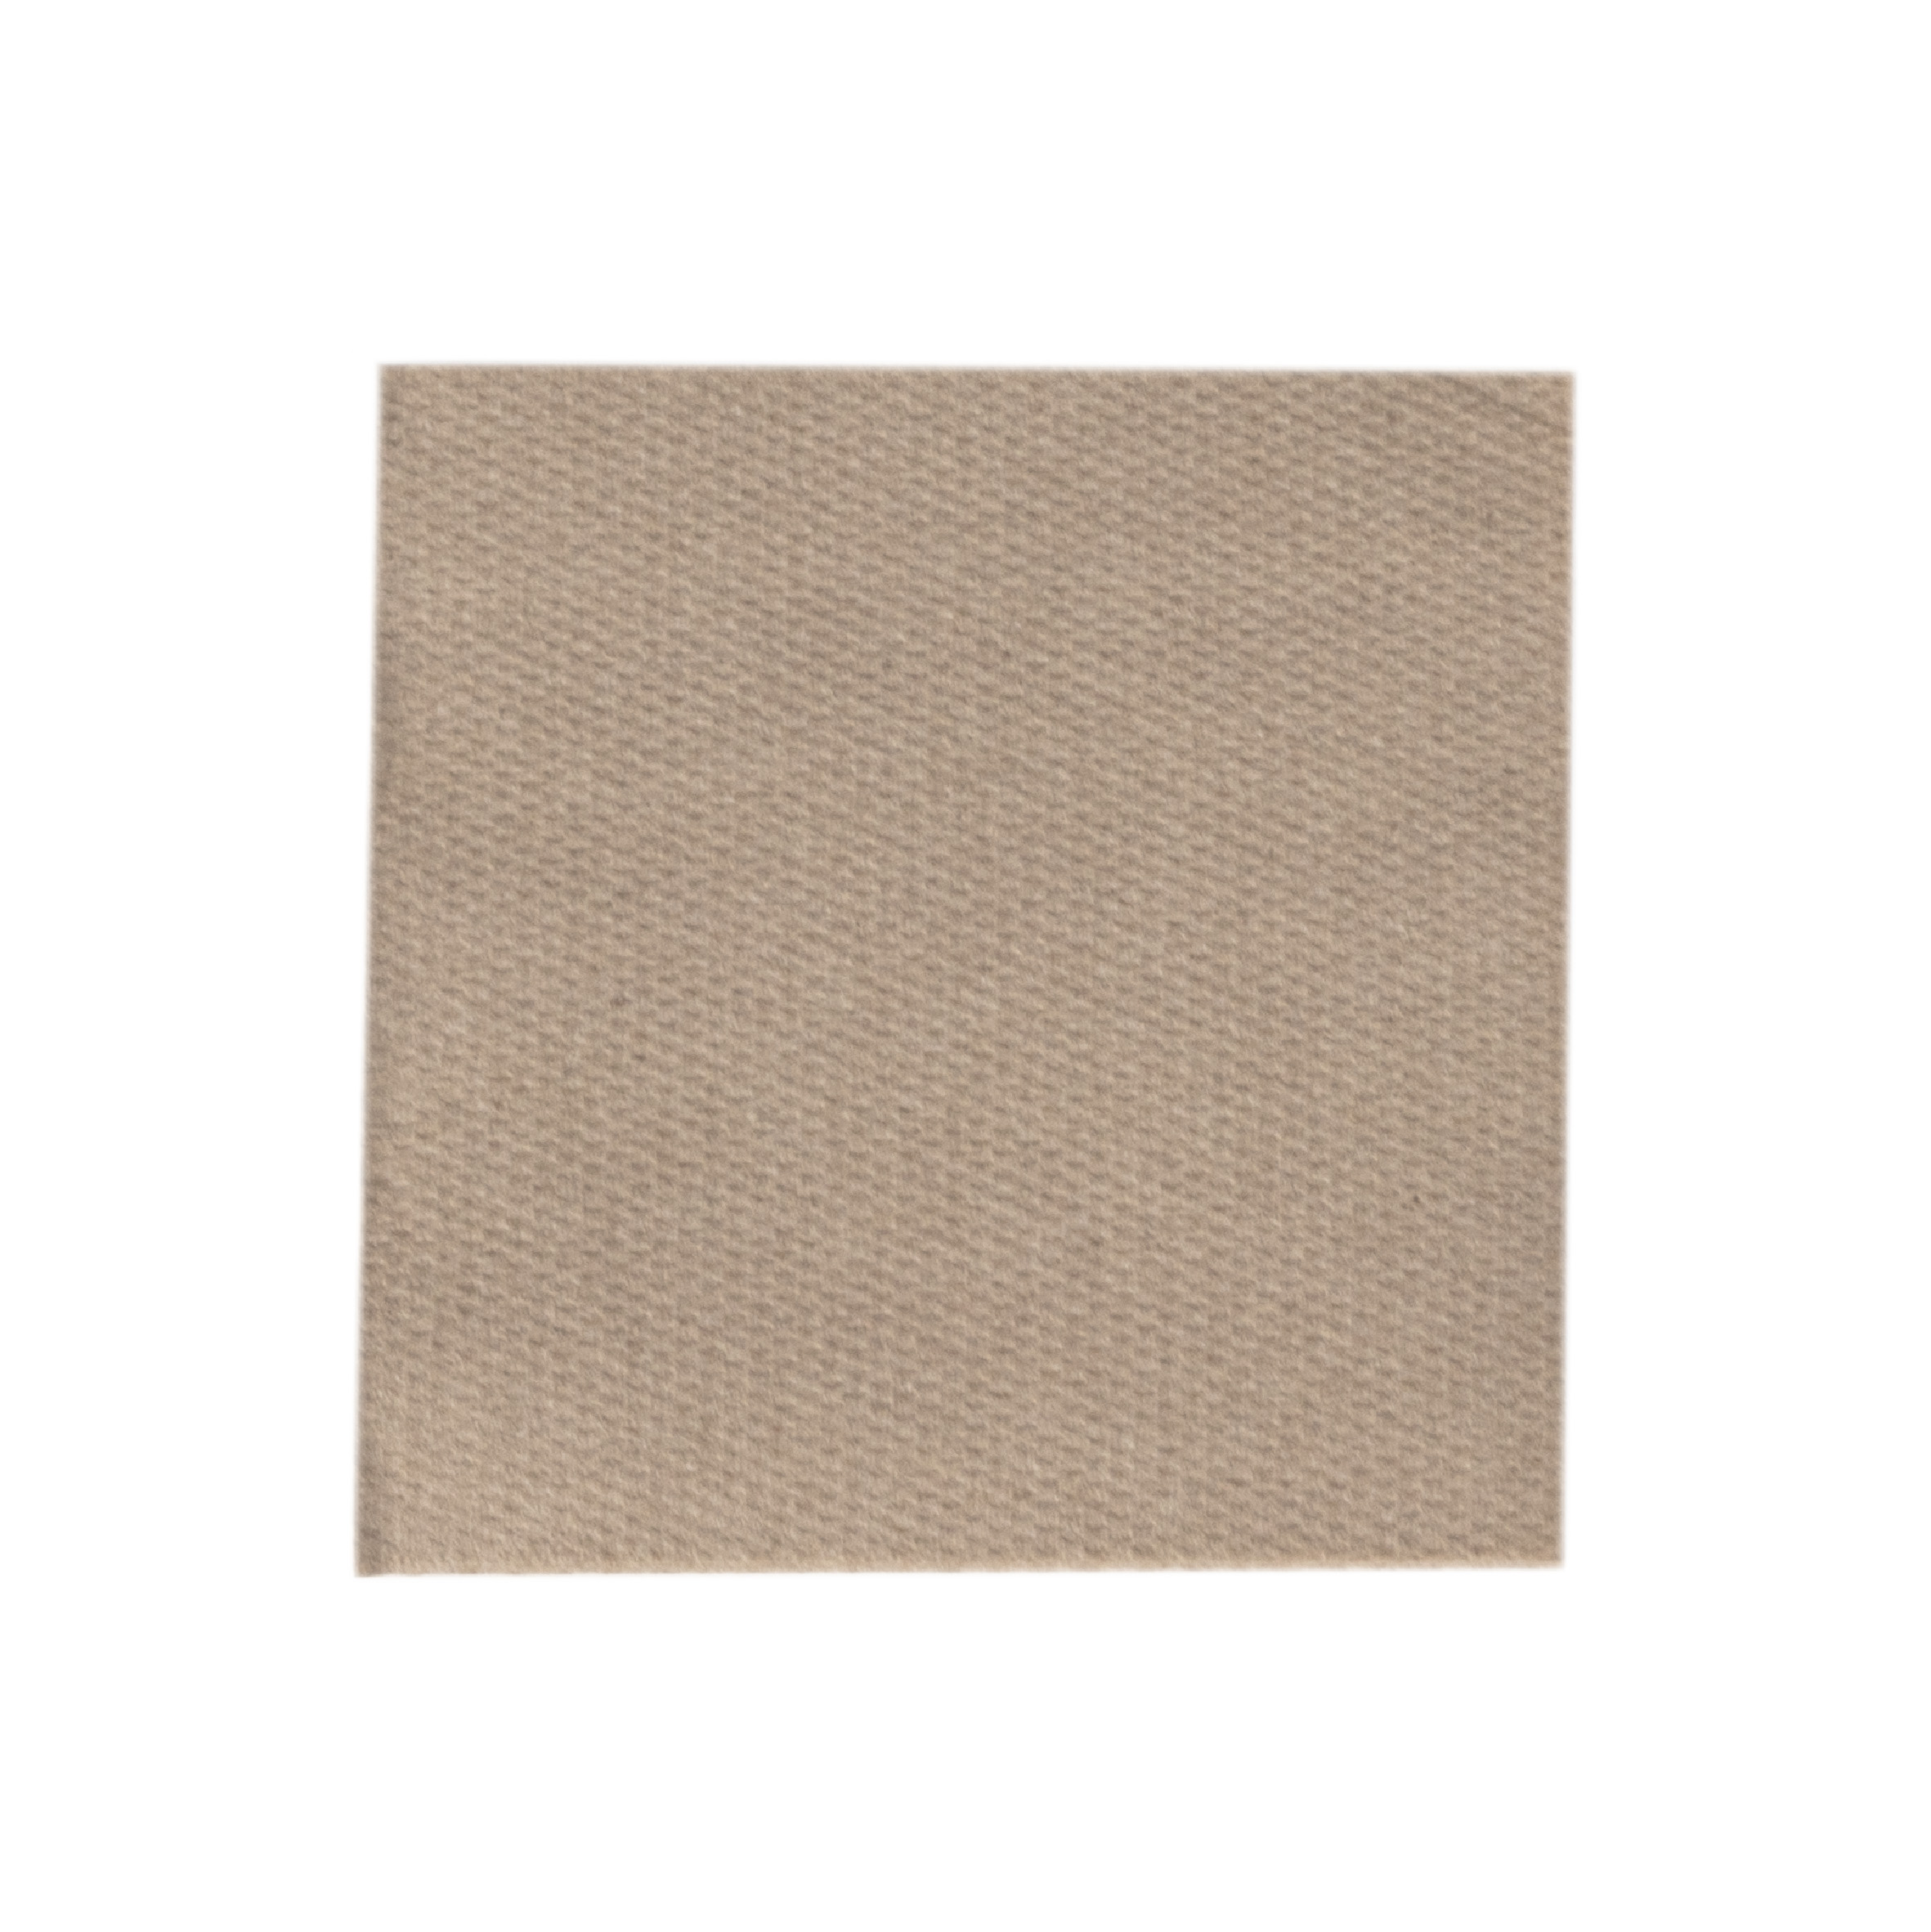 Mank Serviette Softpoint 1/4 Falz, 17 x 17 cm, Basic beige-grau